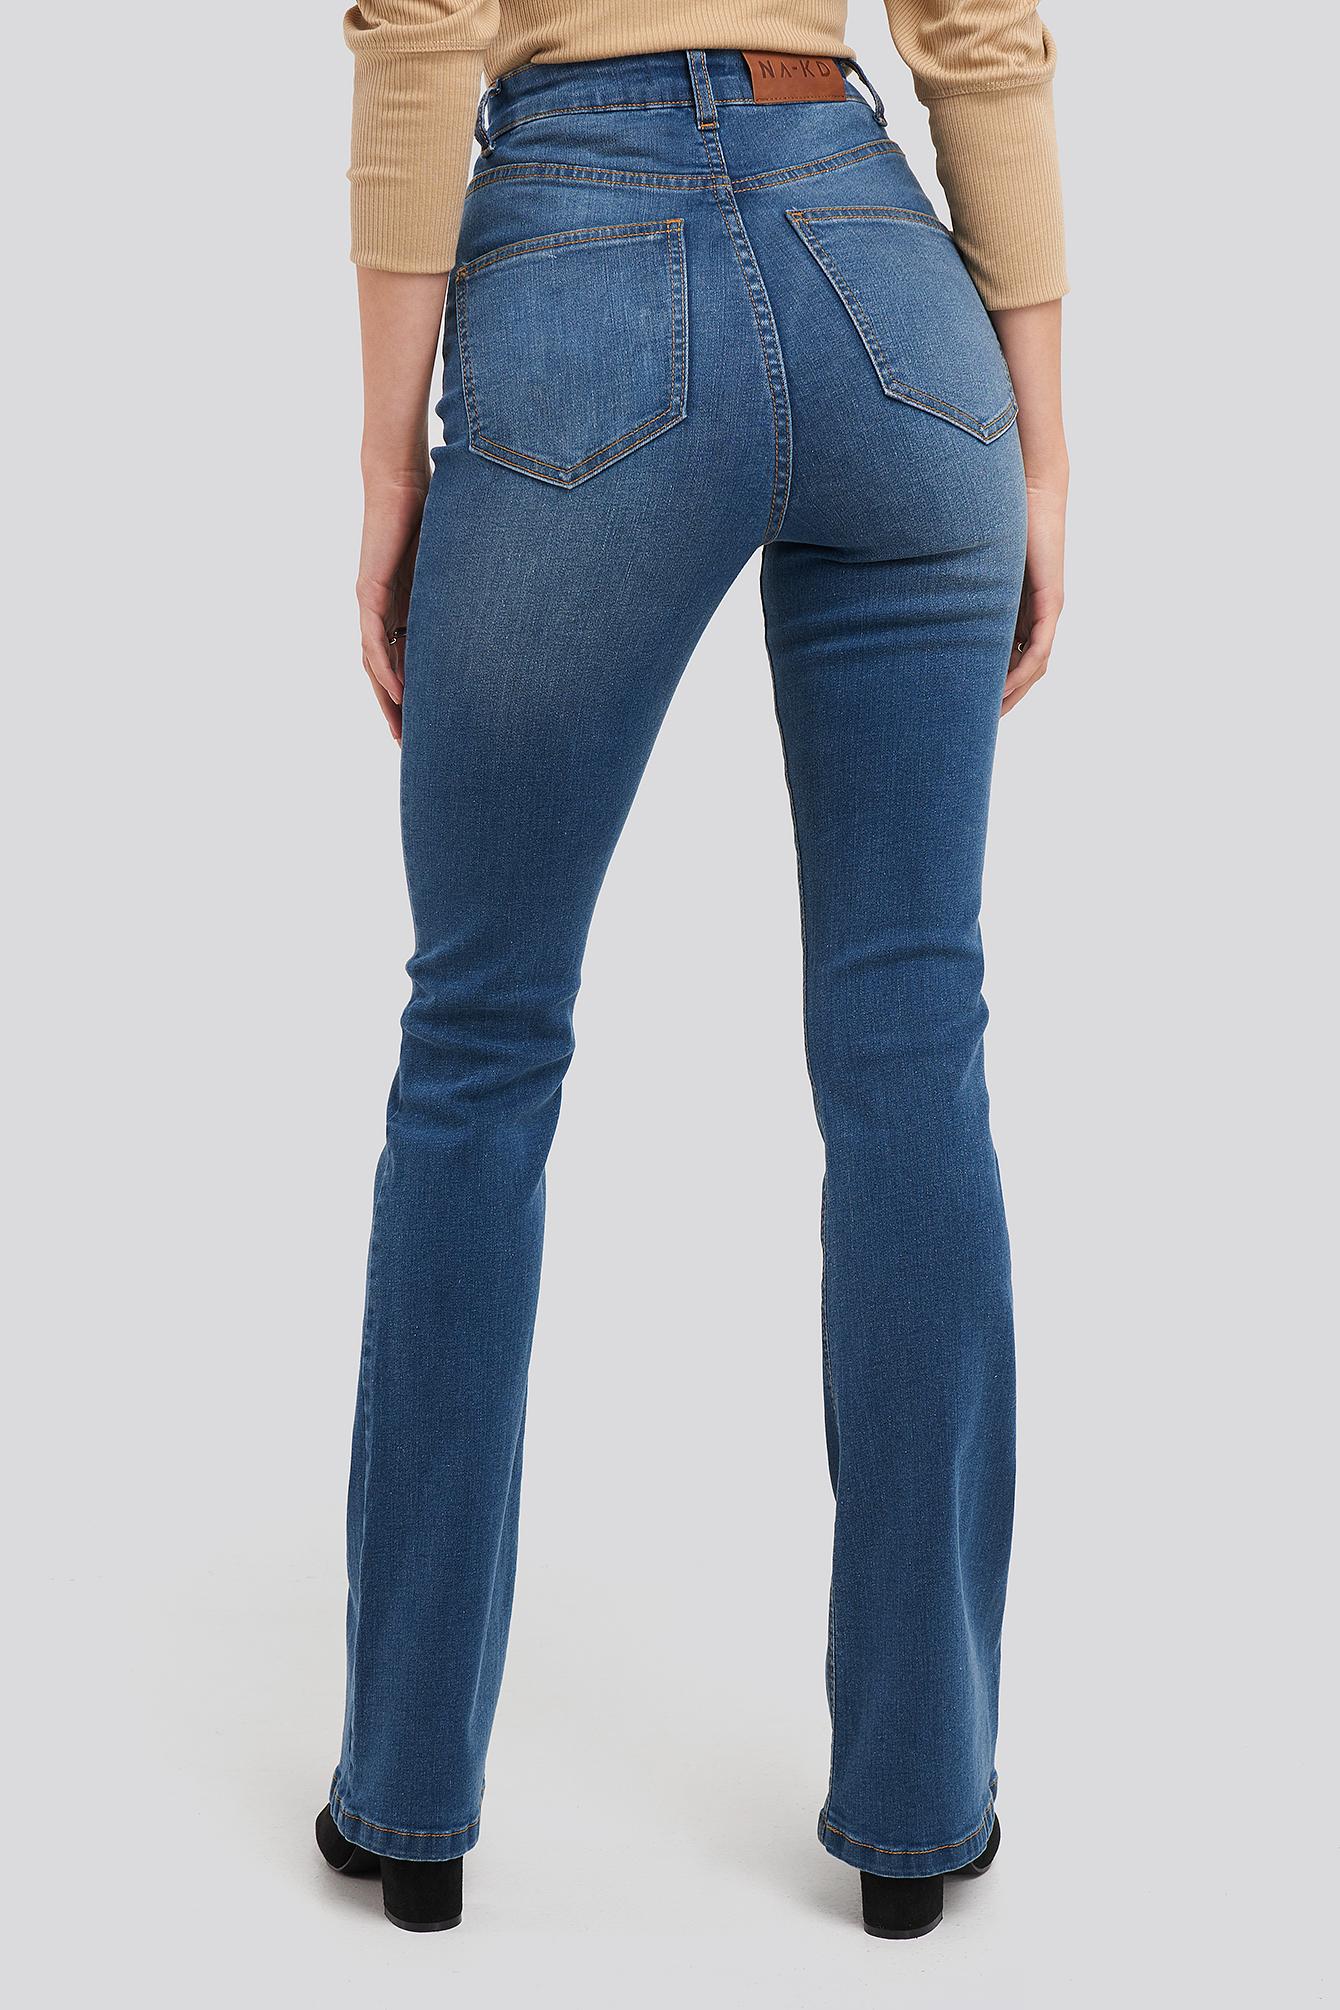 NA-KD Denim Blue Skinny Bootcut Jeans - Lyst